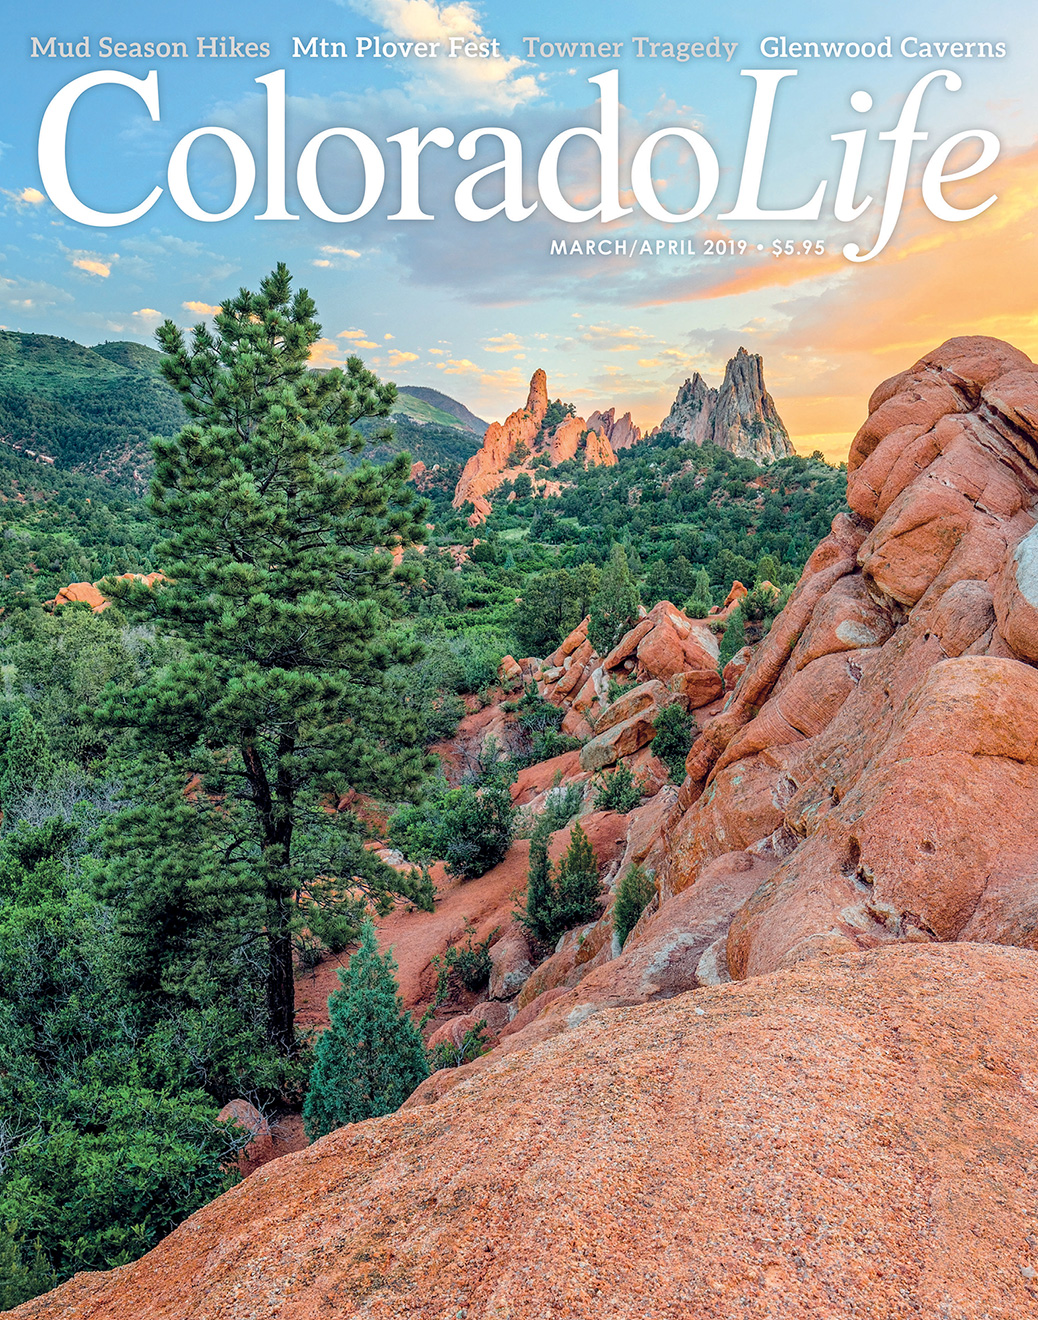 Colorado Life - March/April 2019 - Colorado Life Cover -  Picture